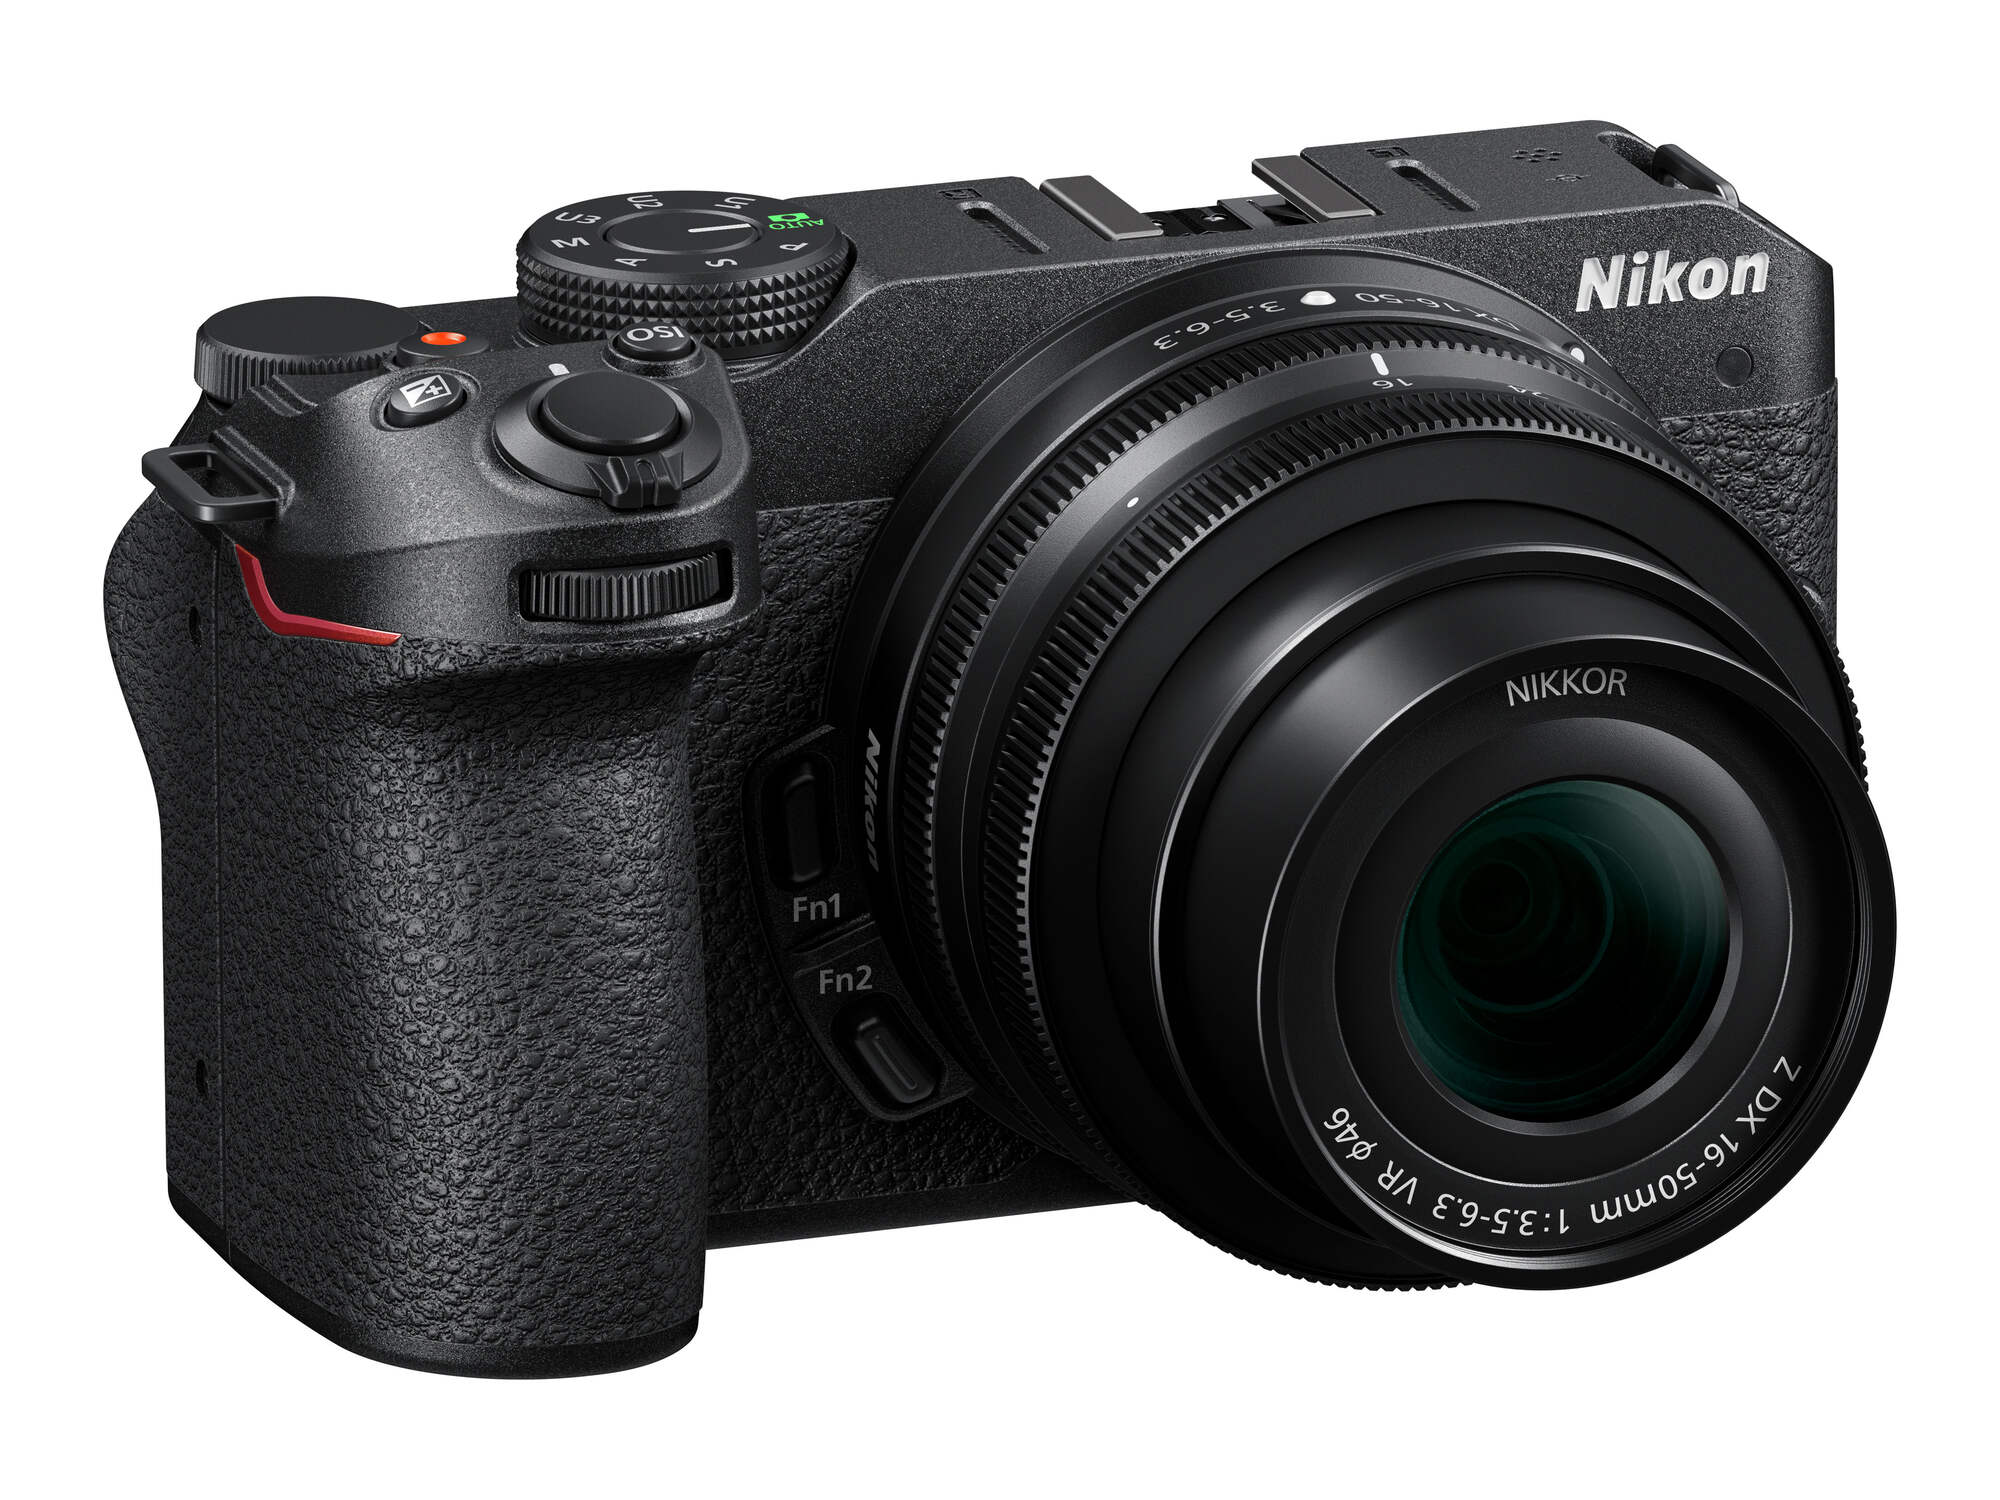 When Will Nikon Release A Mirrorless Camera